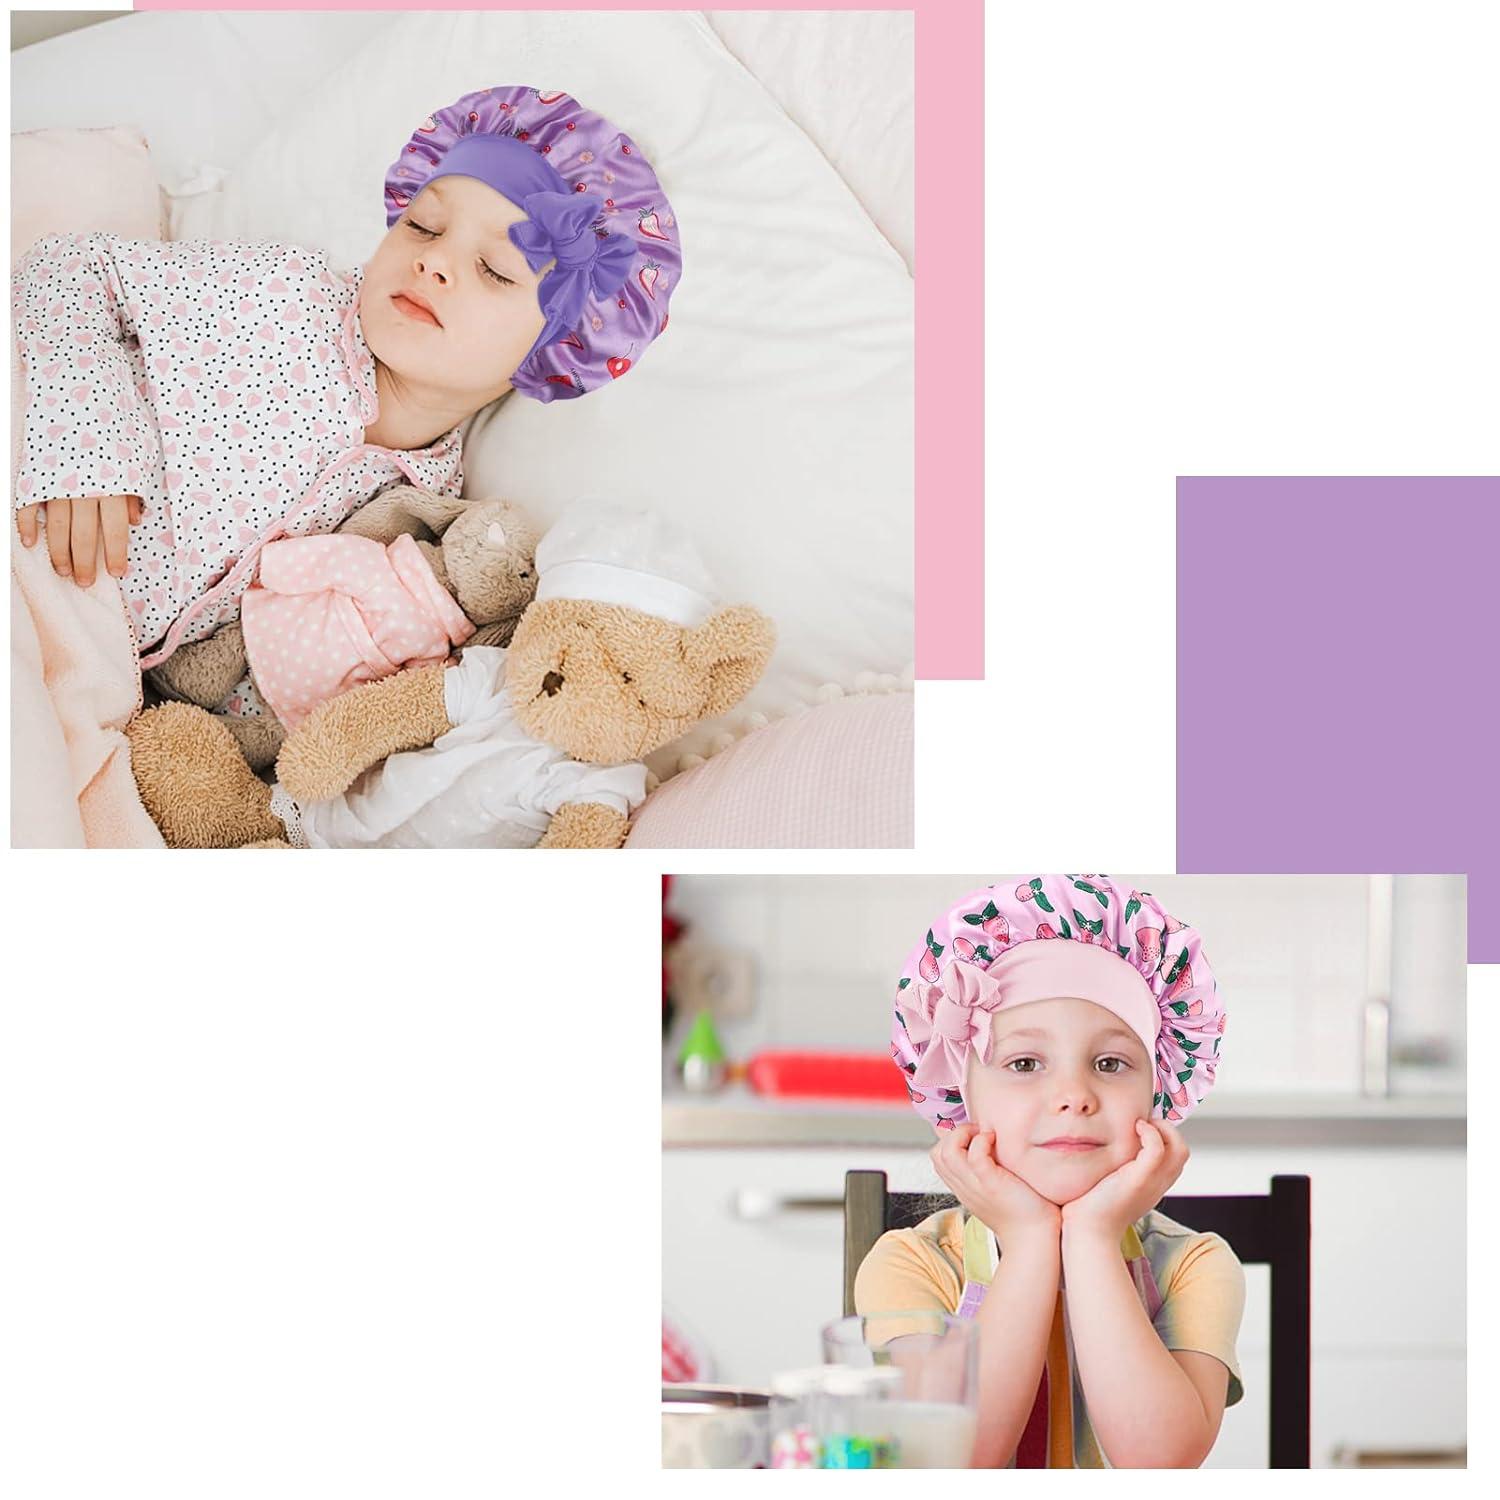  Arqumi Pack of 2 Satin Sleeping Bonnet for Kids, Soft Satin  Sleep Bonnet with Elastic Strap, Adjustable Sleep Cap Hair Bonnet for  Children, Pink+Purple : Beauty & Personal Care